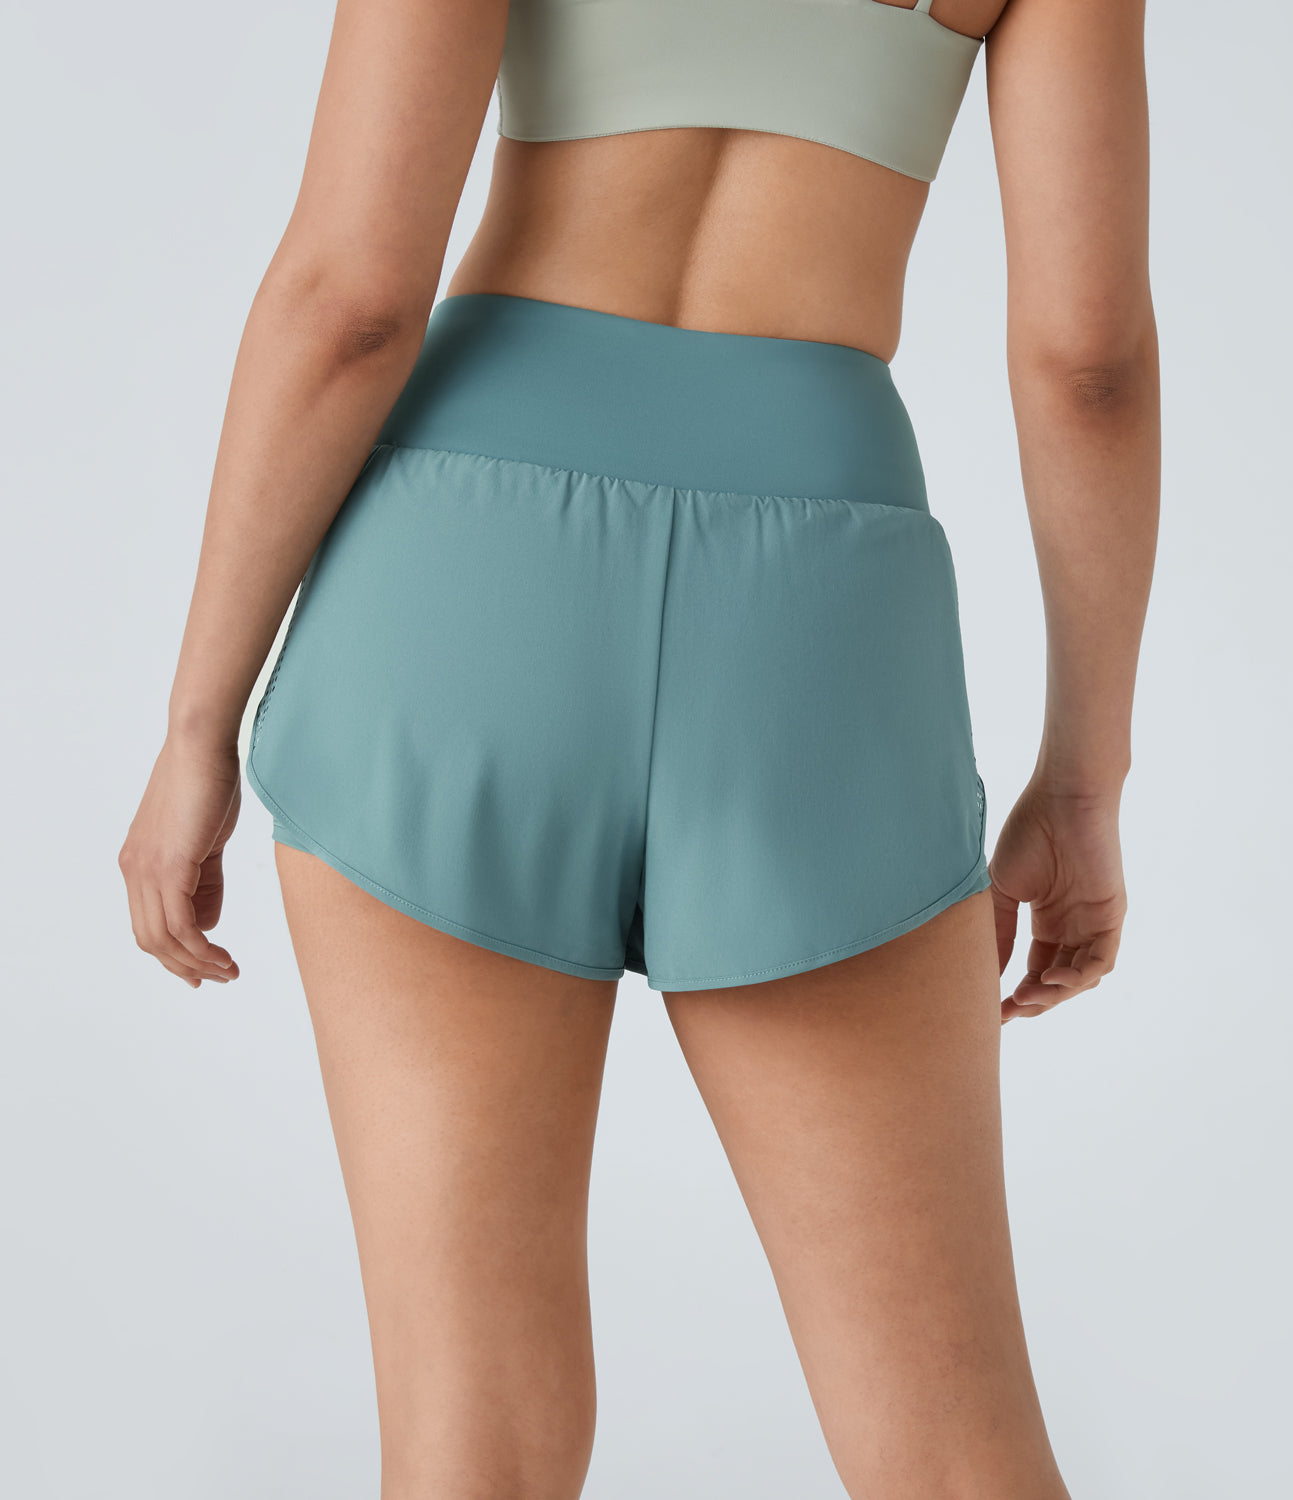 

Halara Breezefulв„ў High Waisted Mesh 2-in-1 Side Pocket Quick Dry Yoga Shorts Gym Short - Black -  booty shorts compression shorts